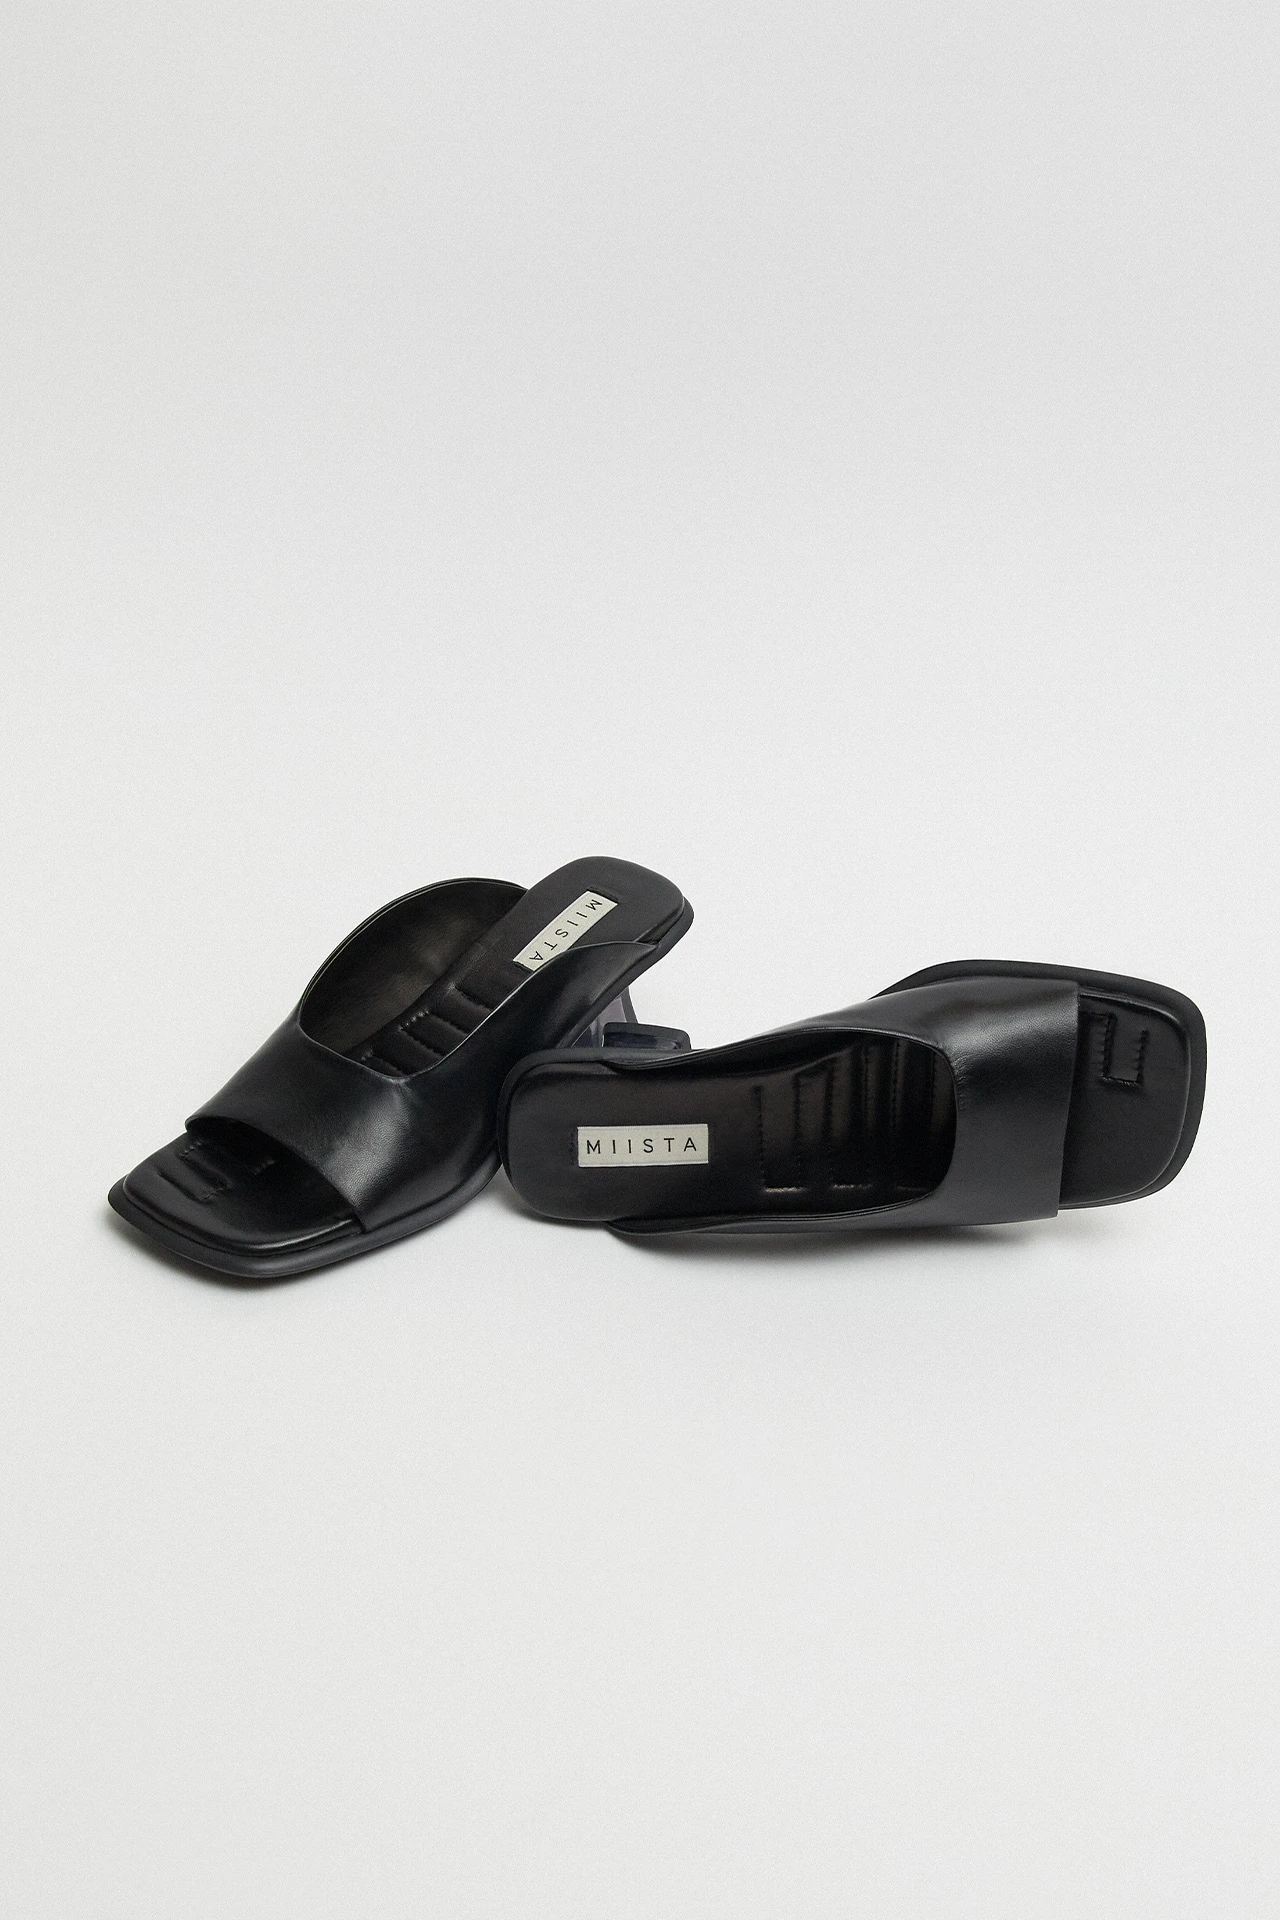 Miista-janaina-black-mule-sandals-02